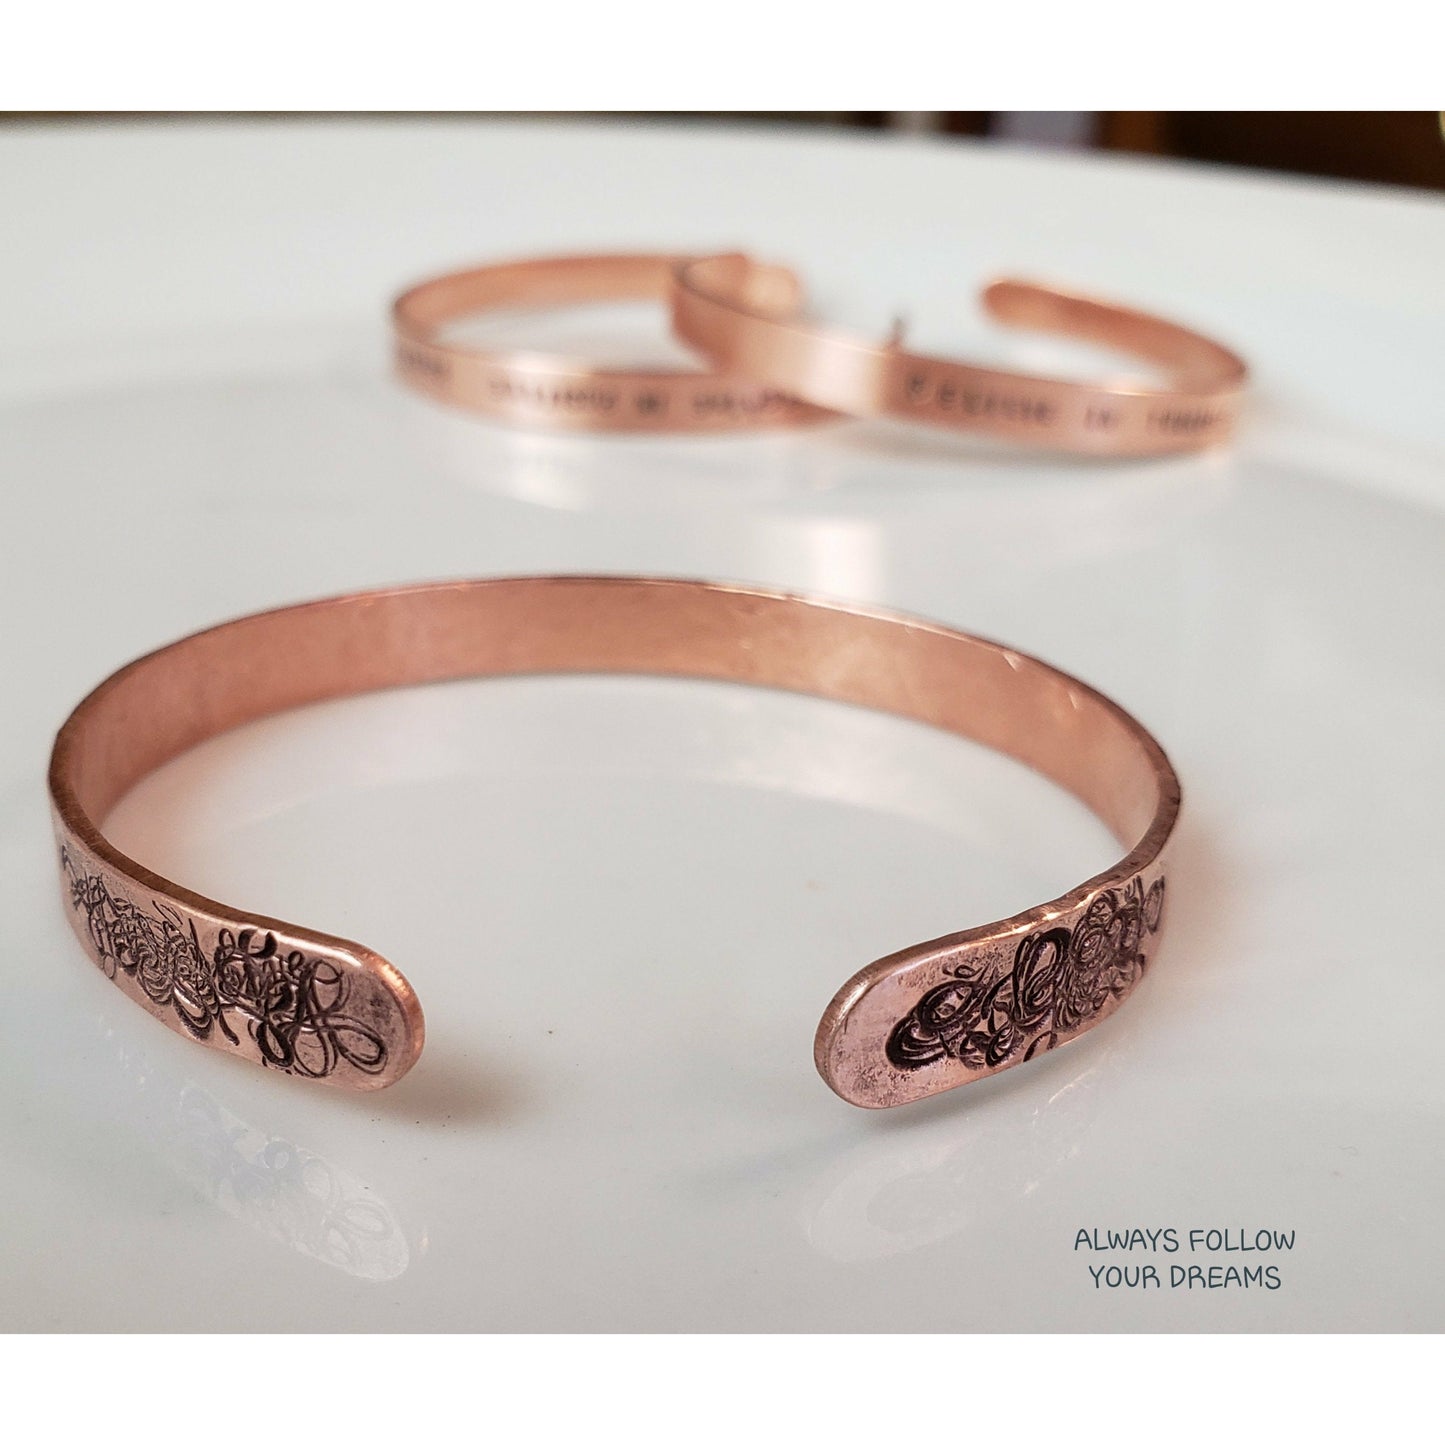 Mantra Copper Cuff, (1), inspirational bracelets, copper bracelet, gifts for her, yoga